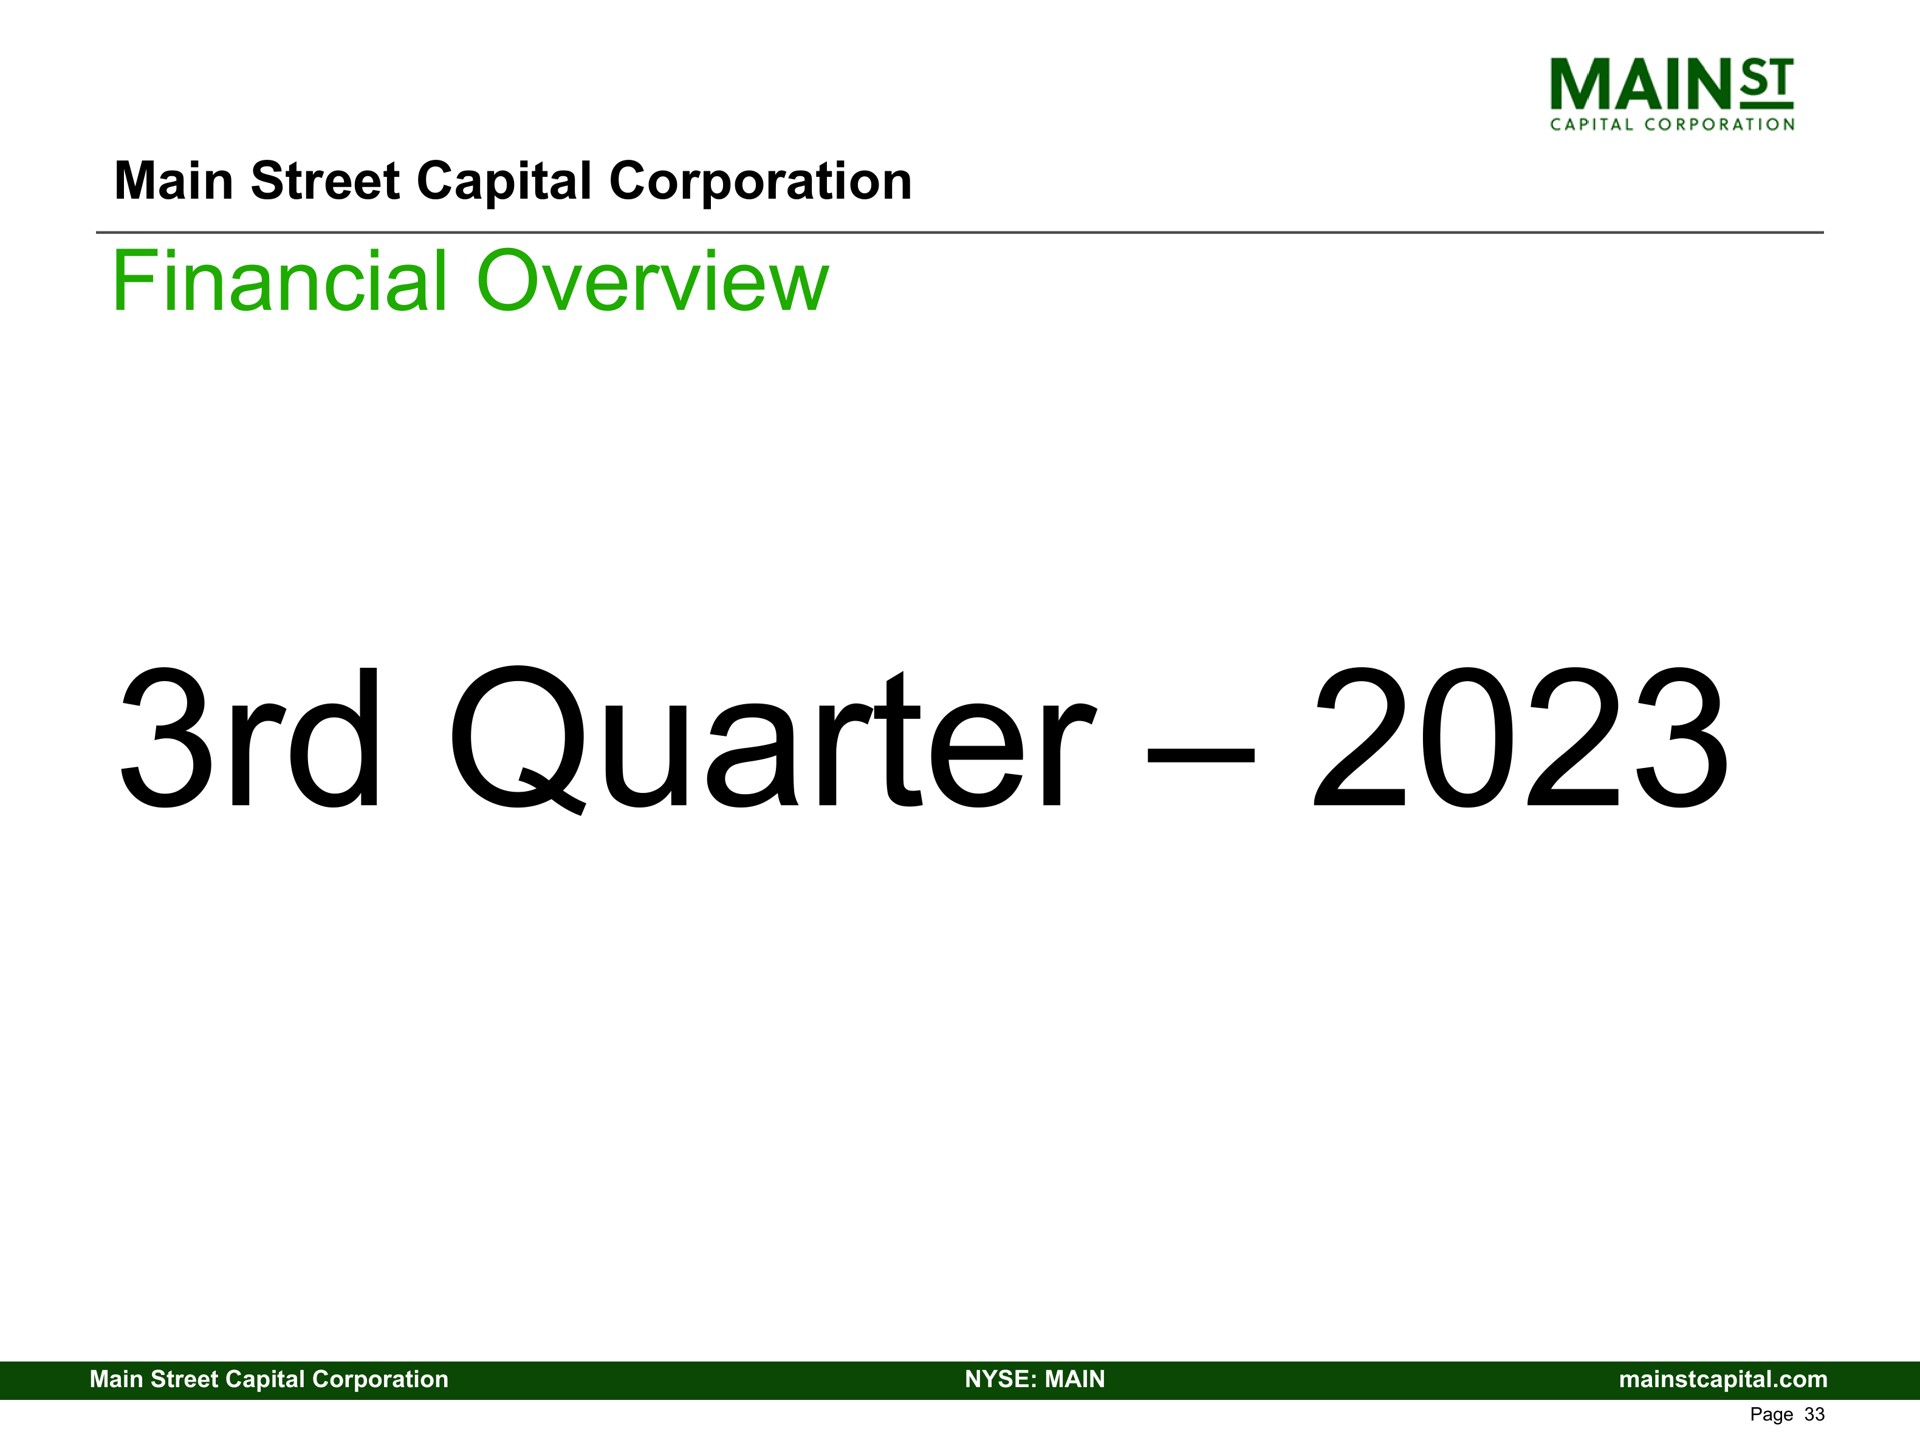 main street capital corporation financial overview quarter mains | Main Street Capital